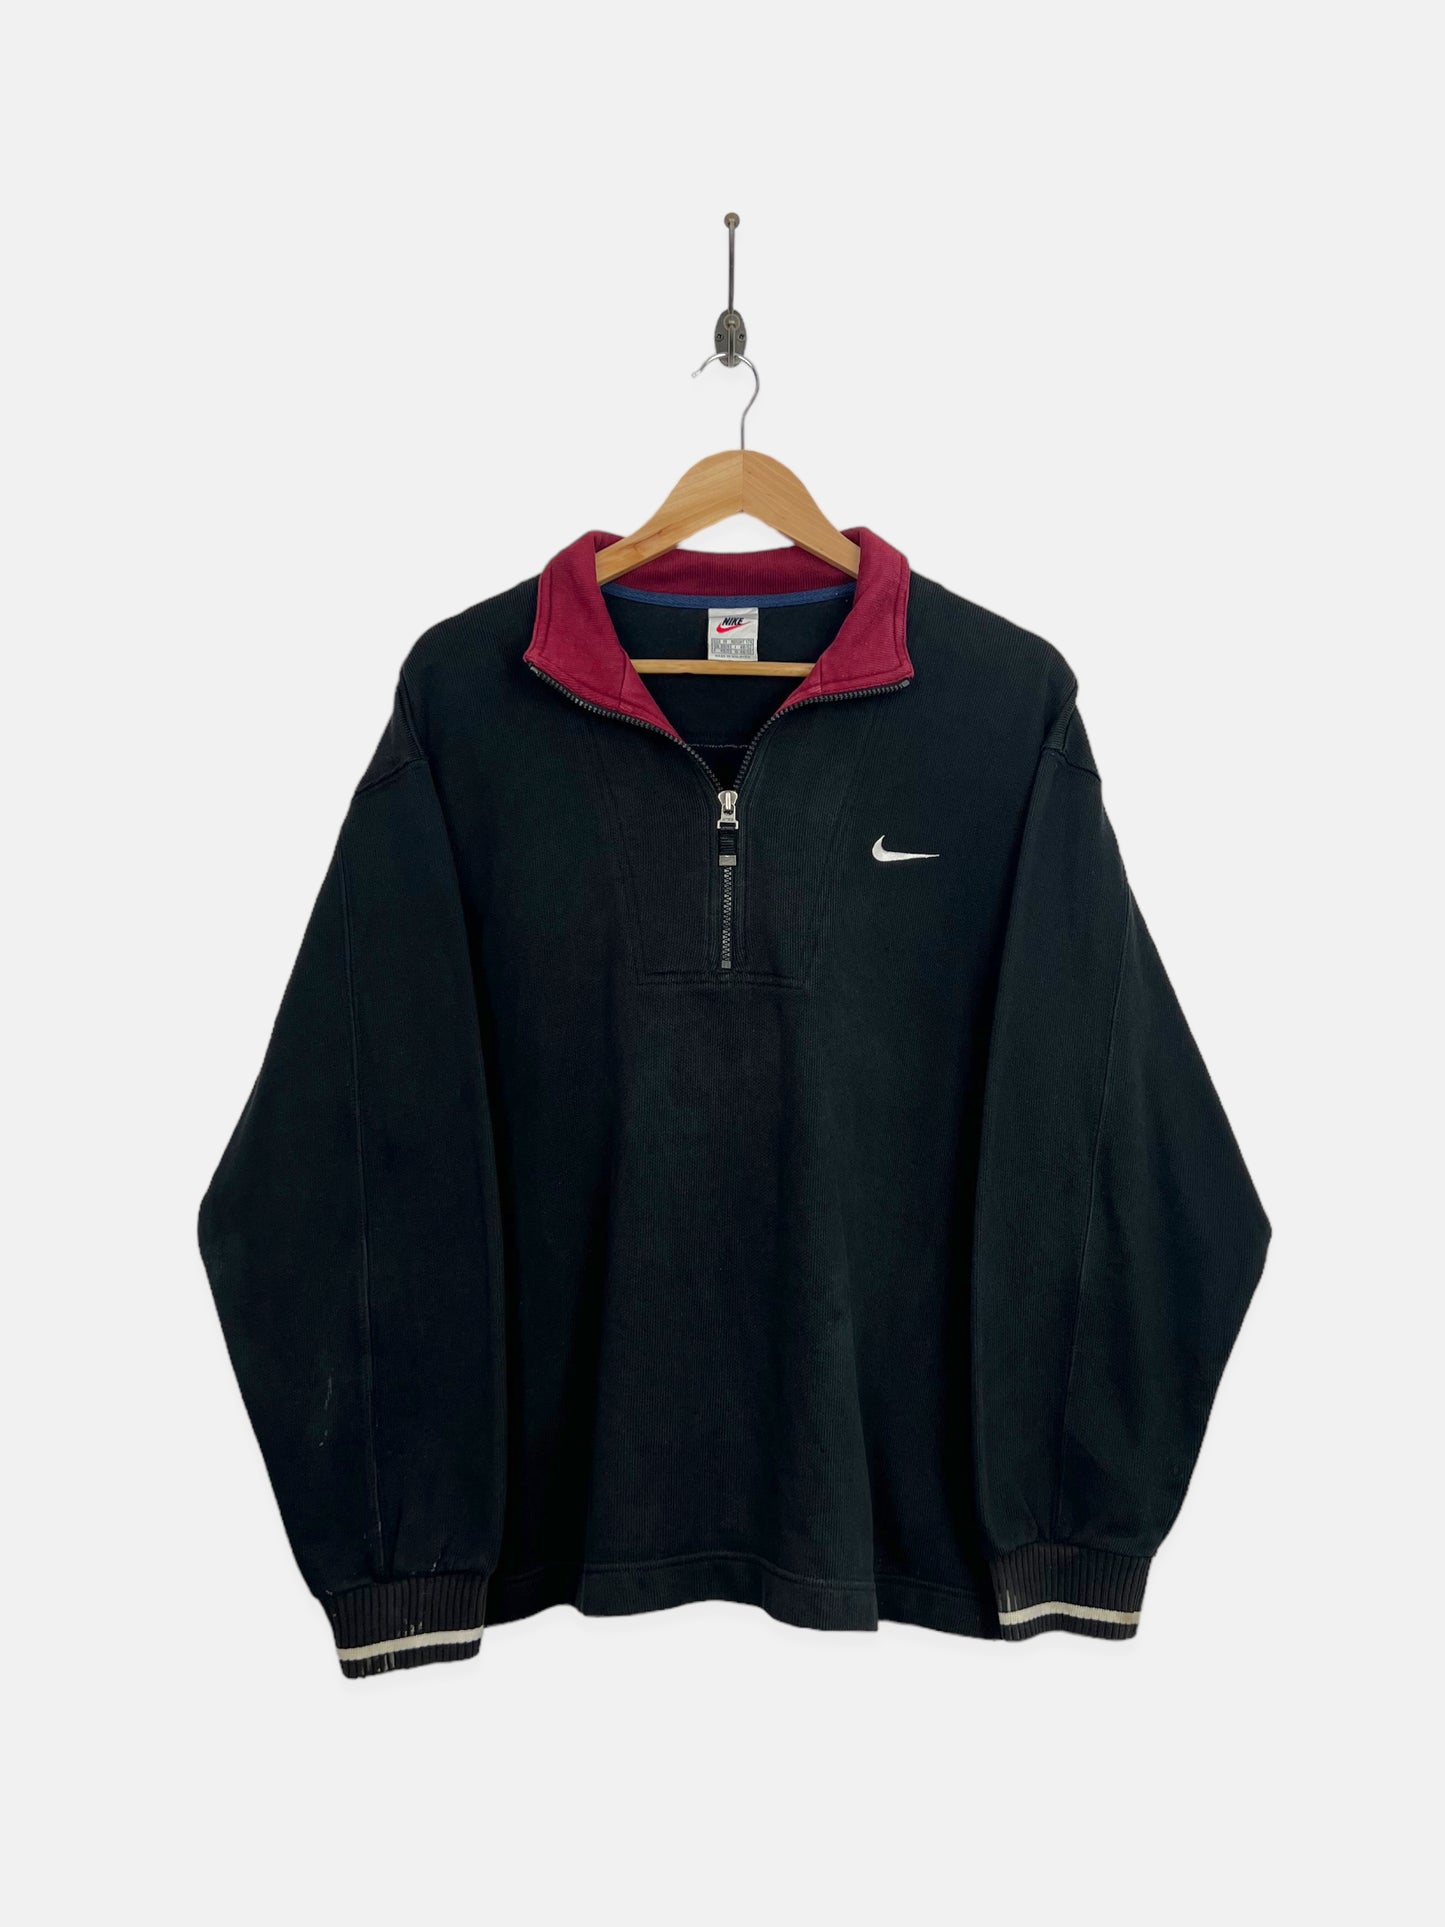 90's Nike Embroidered Vintage Quarterzip Sweatshirt Size 12-14